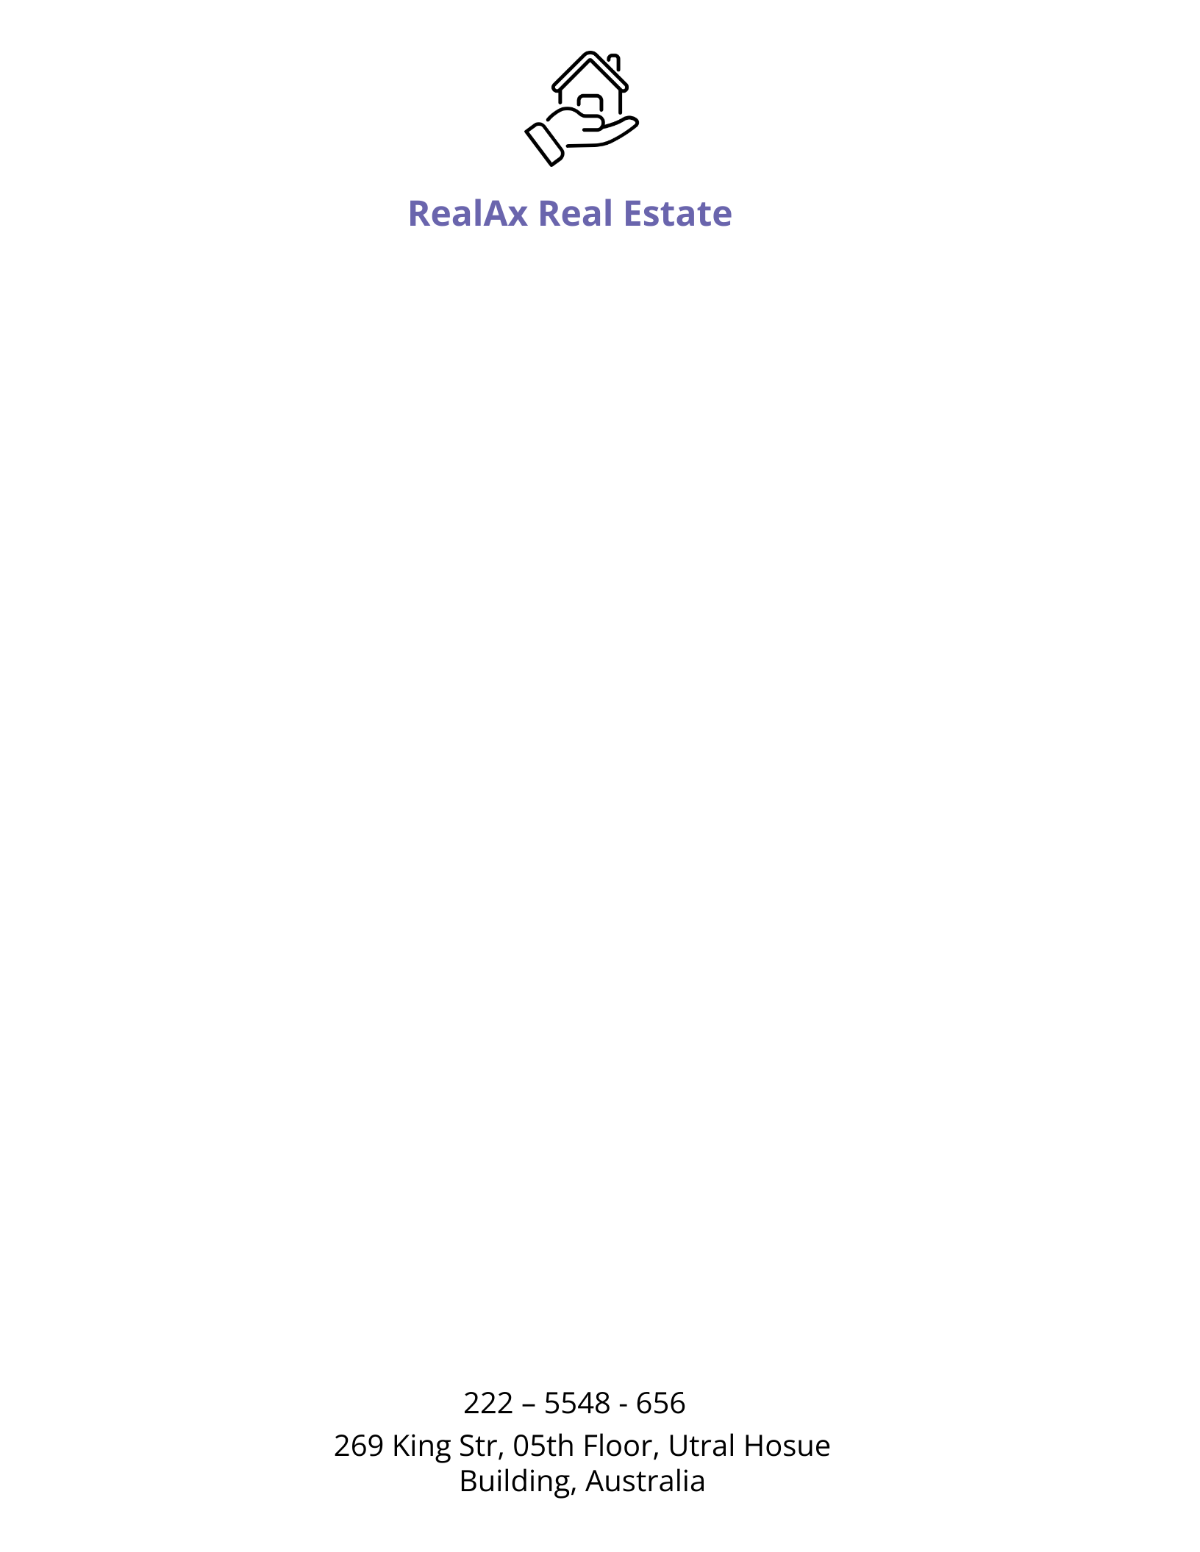 Real Estate Company Letterhead